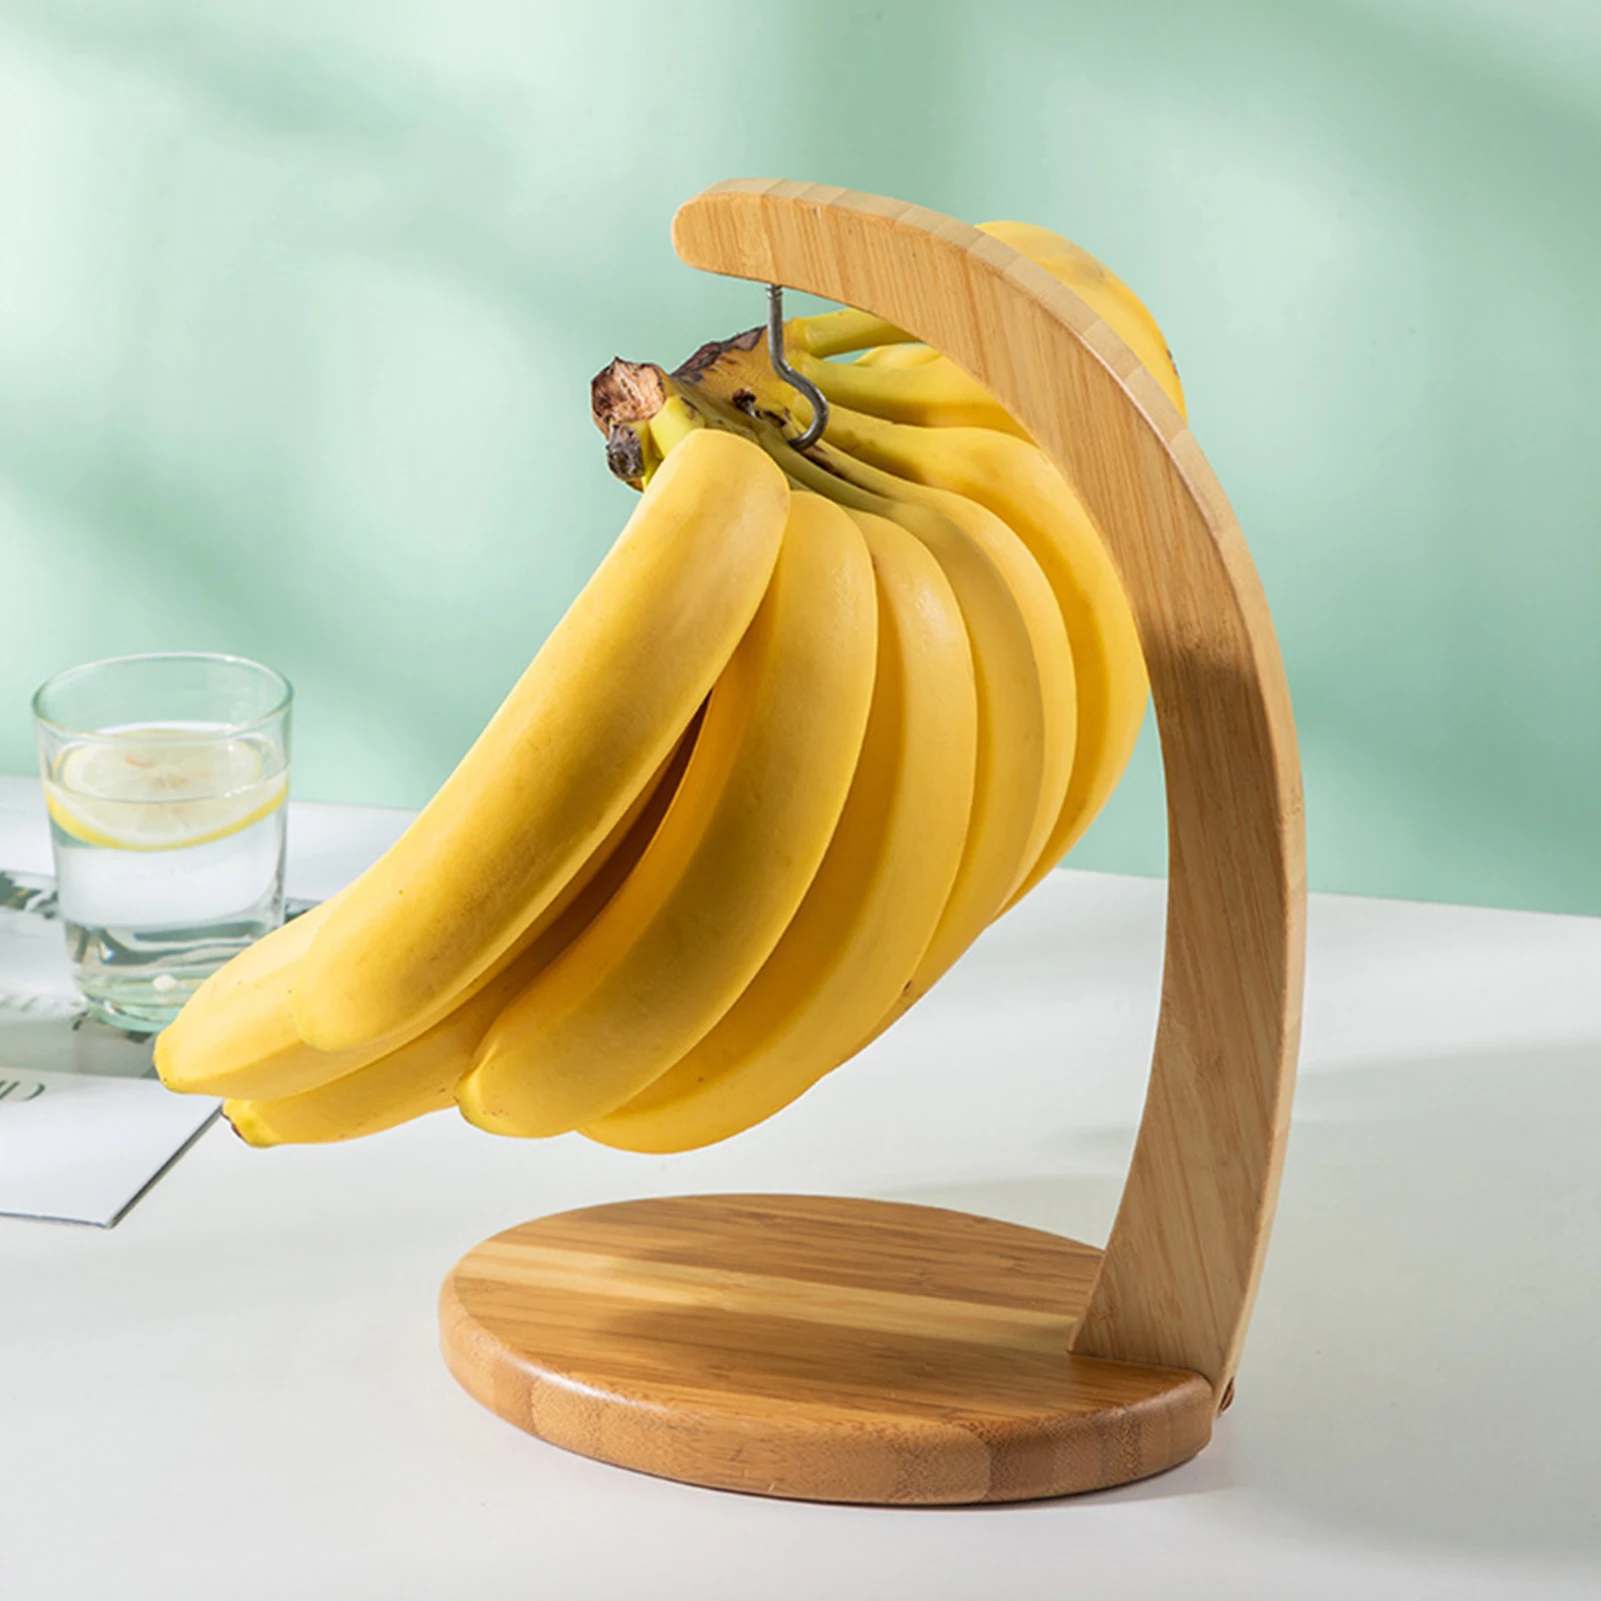 Banana Tree Hanger Banana Holder Banana Hanger Bamboo Holder Stand Sturdy Fruit Display With Hook For Home Or Bar Countertop